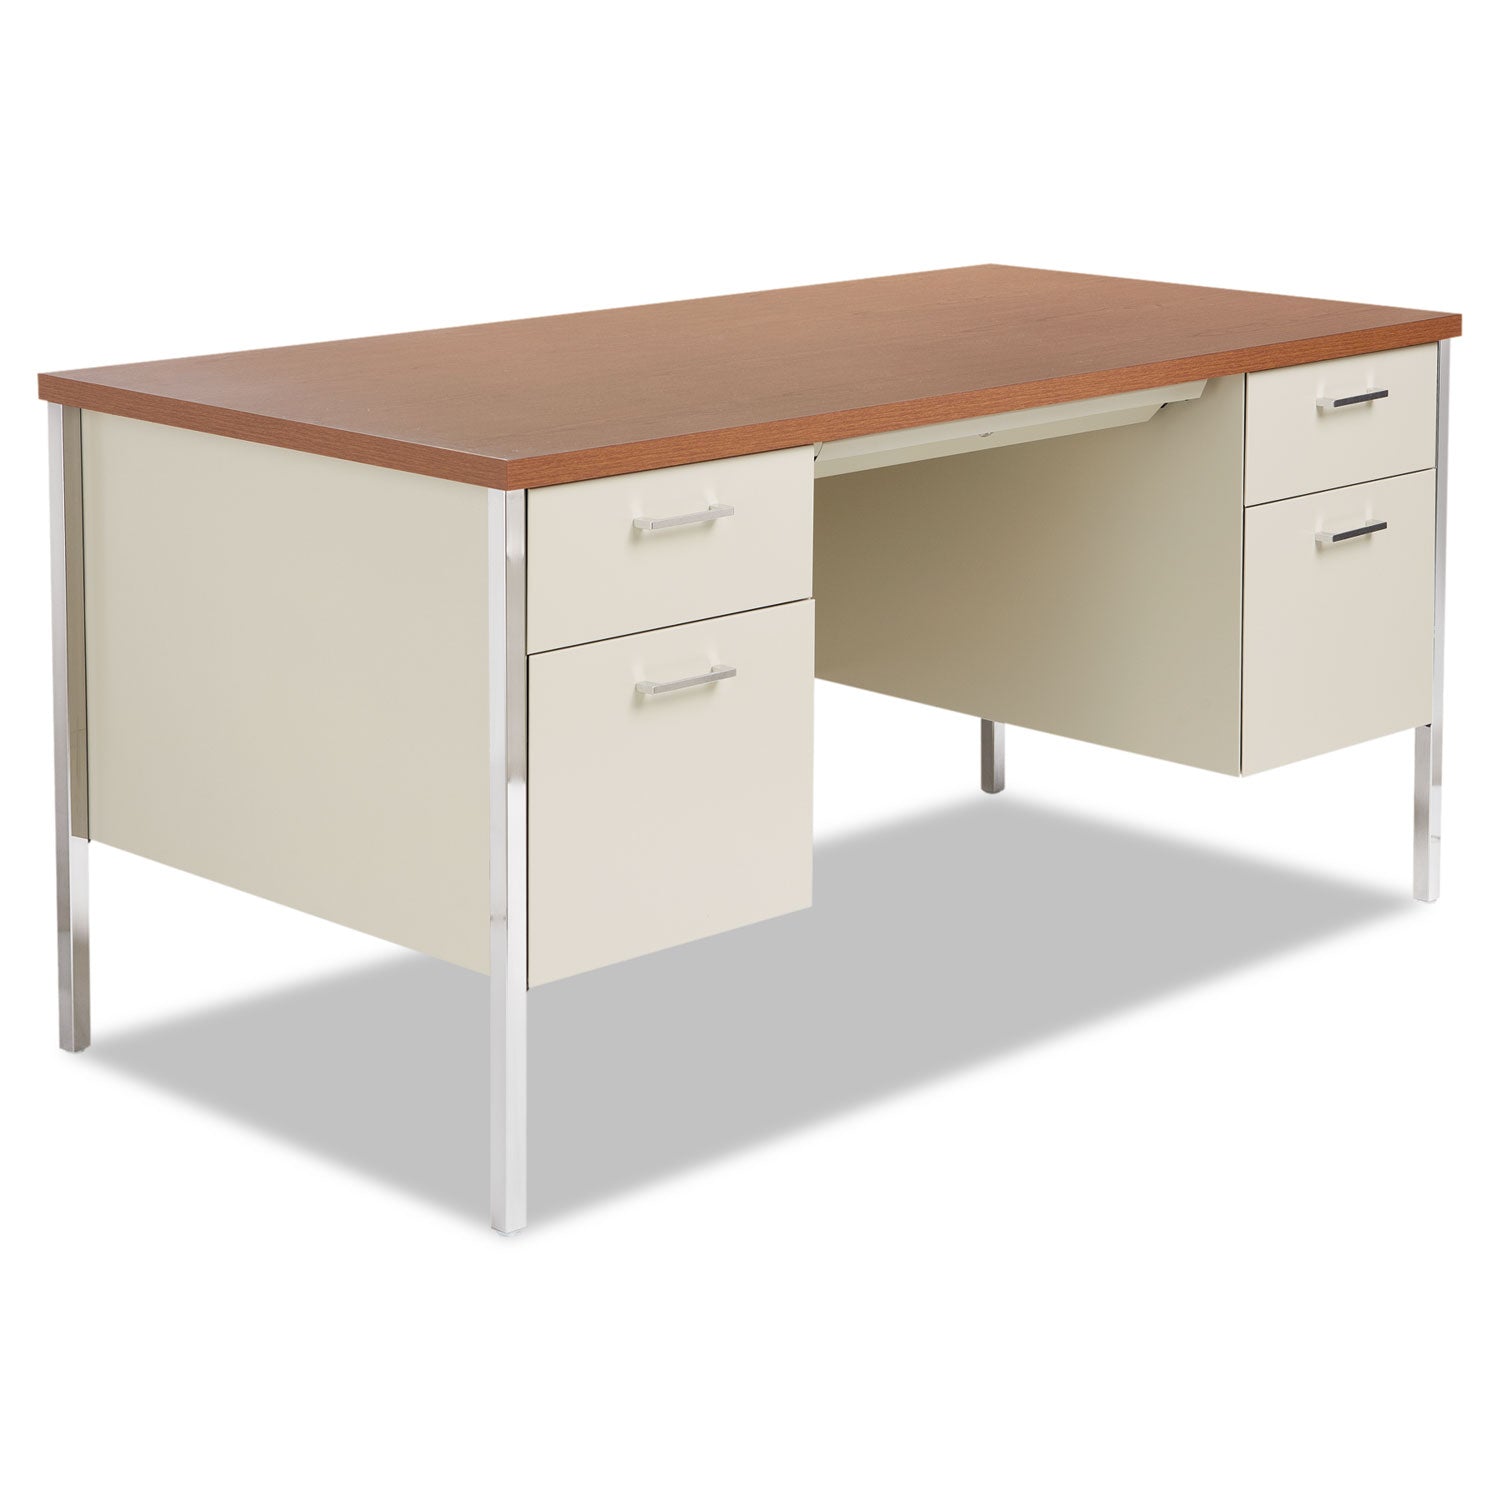 Double Pedestal Steel Desk, 60" x 30" x 29.5", Cherry/Putty, Chrome-Plated Legs - 